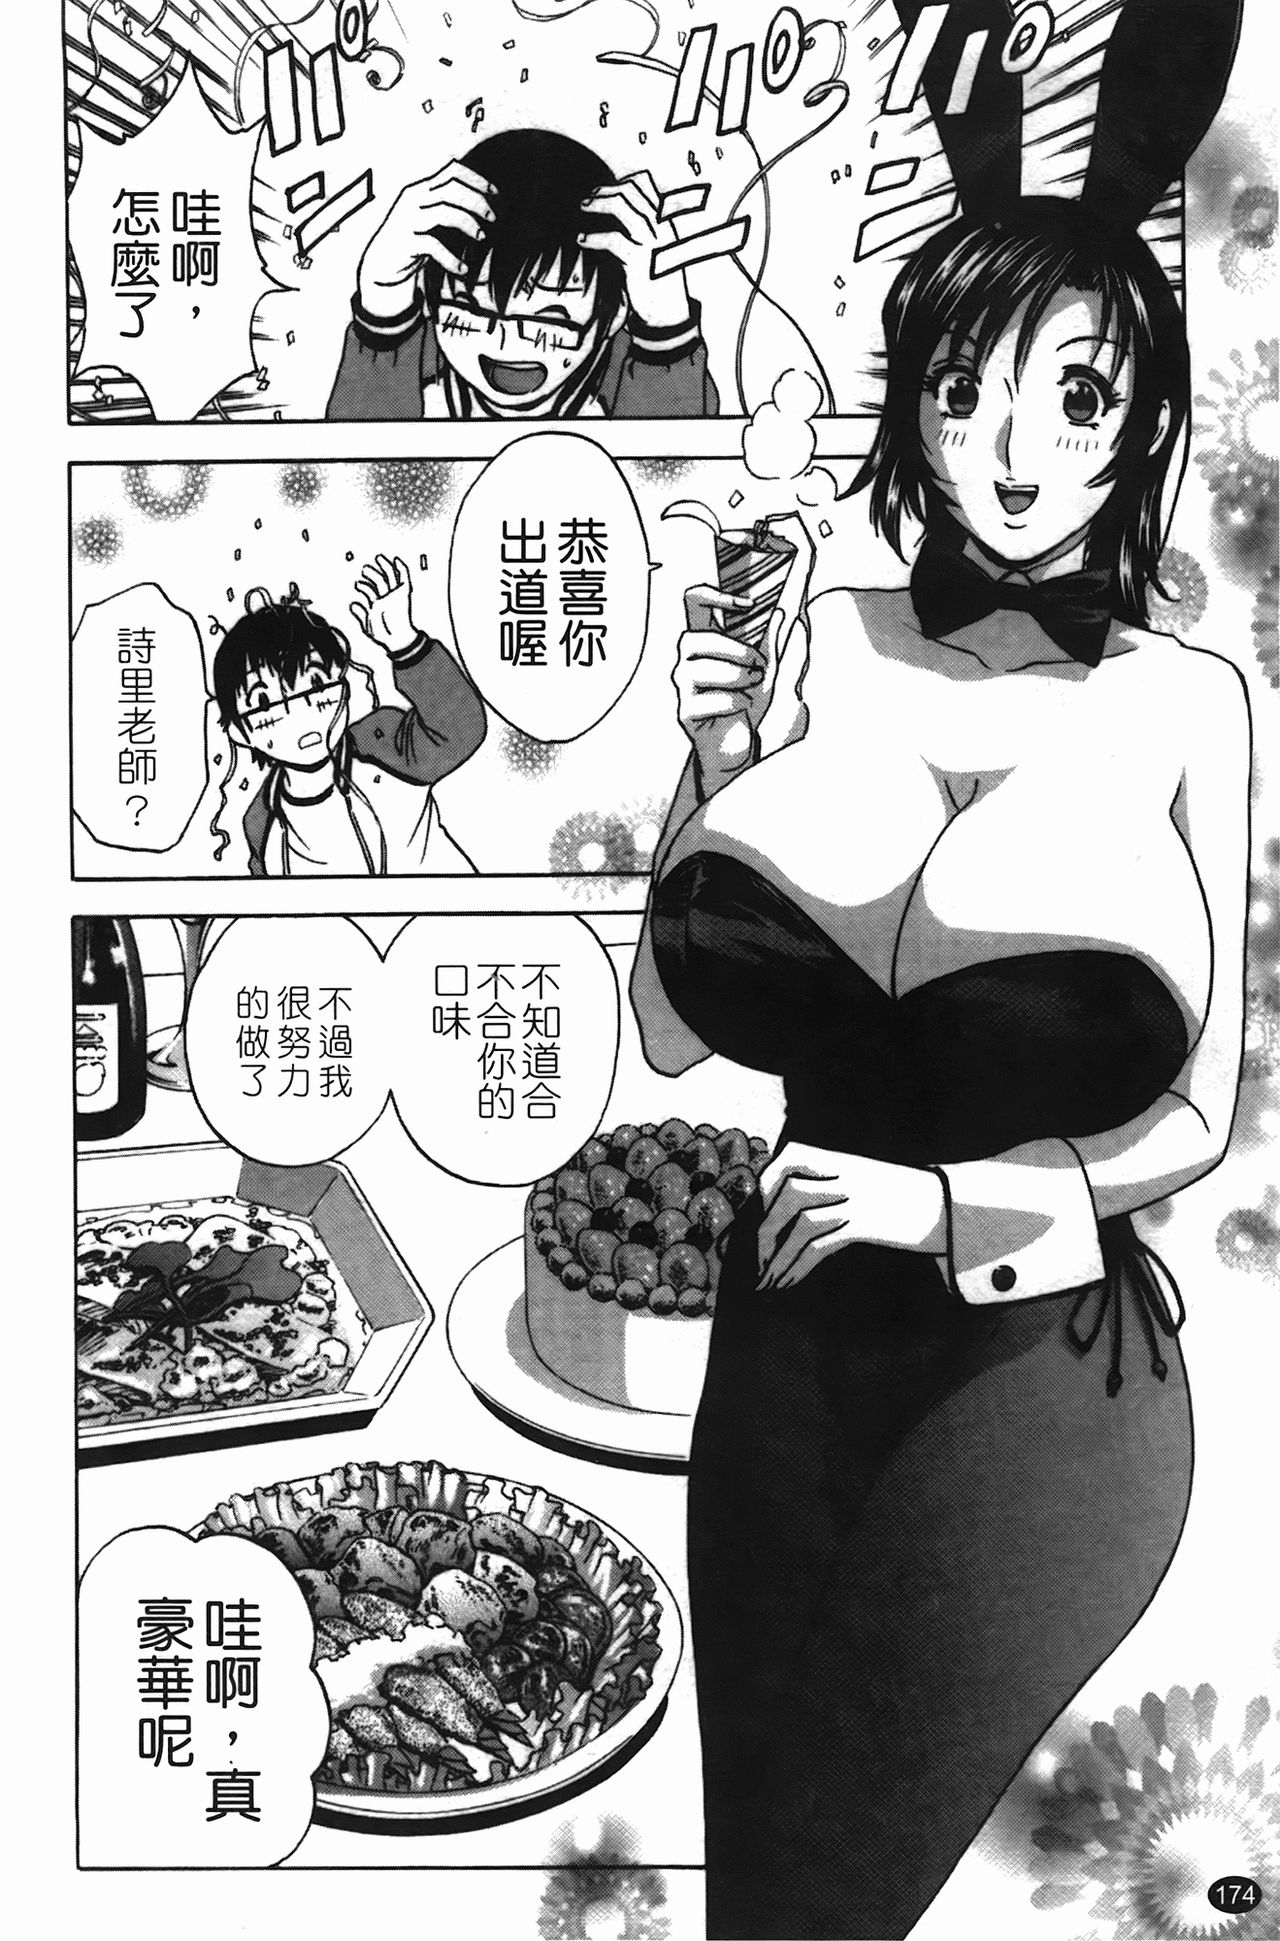 [Hidemaru] Manga no youna Hitozuma to no Hibi - Days with Married Women such as Comics. | 爆乳人妻性生活 [Chinese] 174